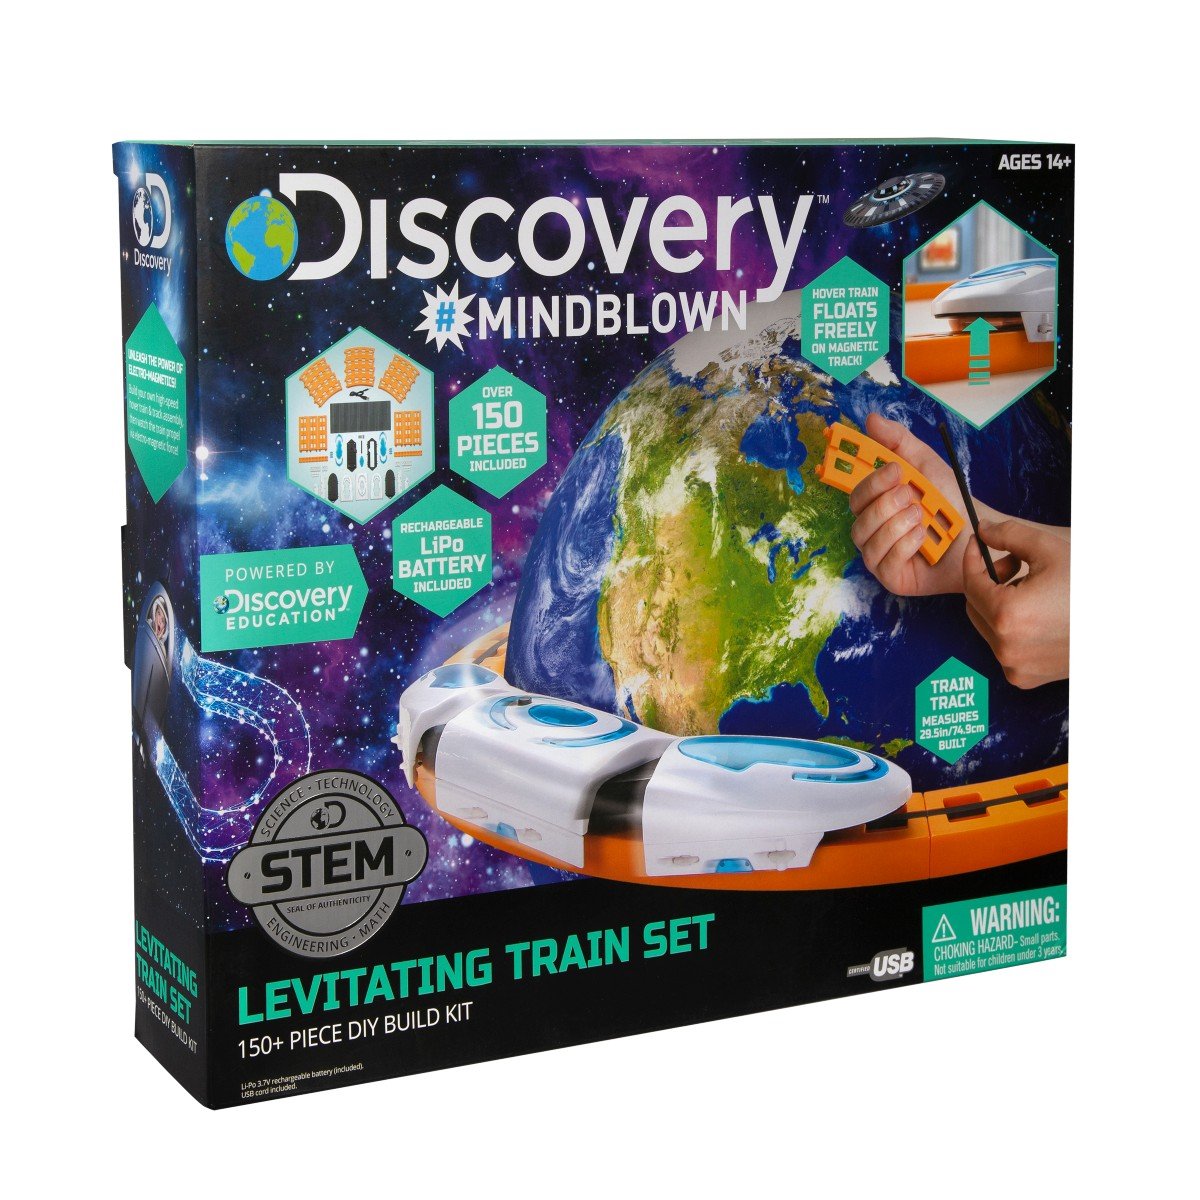 Juegos De Discovery Kids / Juego Velozmente De Discovery Kids Jugar Juego Gratis ... - Todos los ...